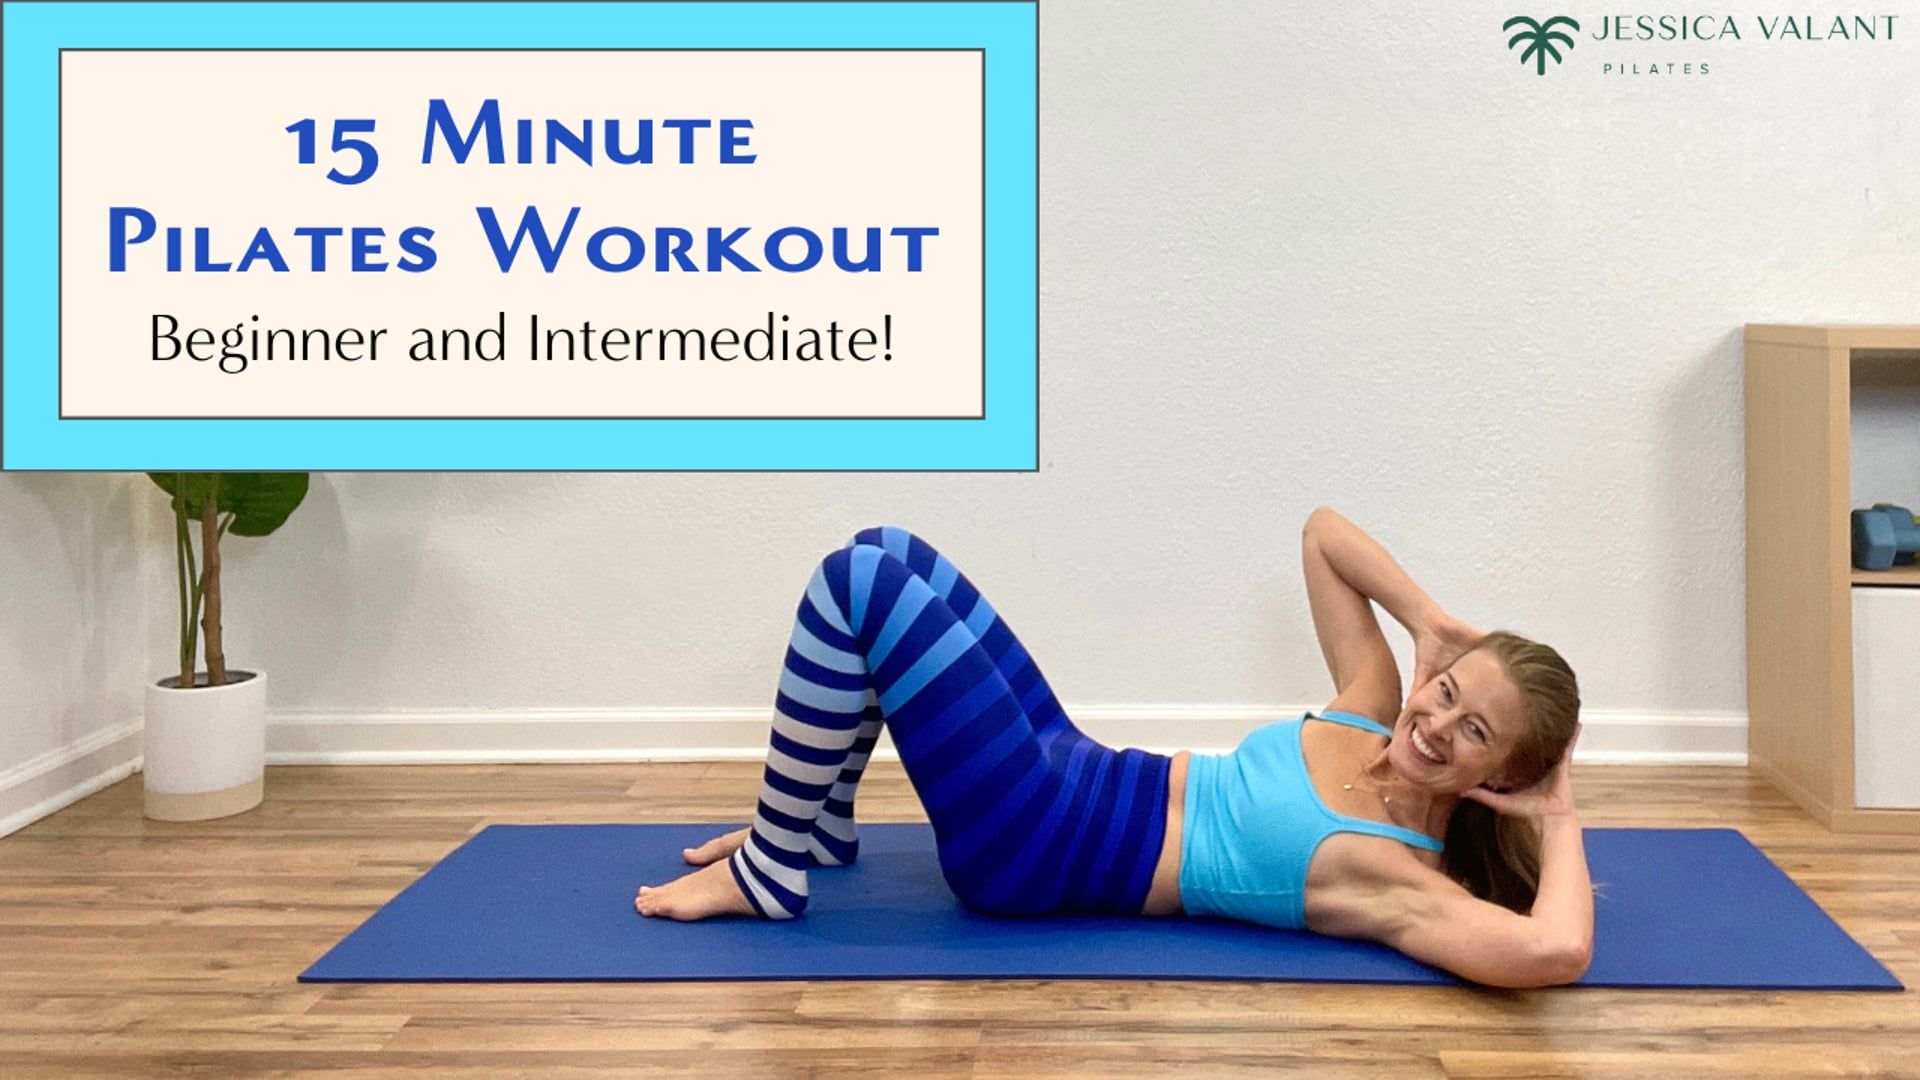 15 Minute Pilates Workout - Beginner & Intermediate - Jessica